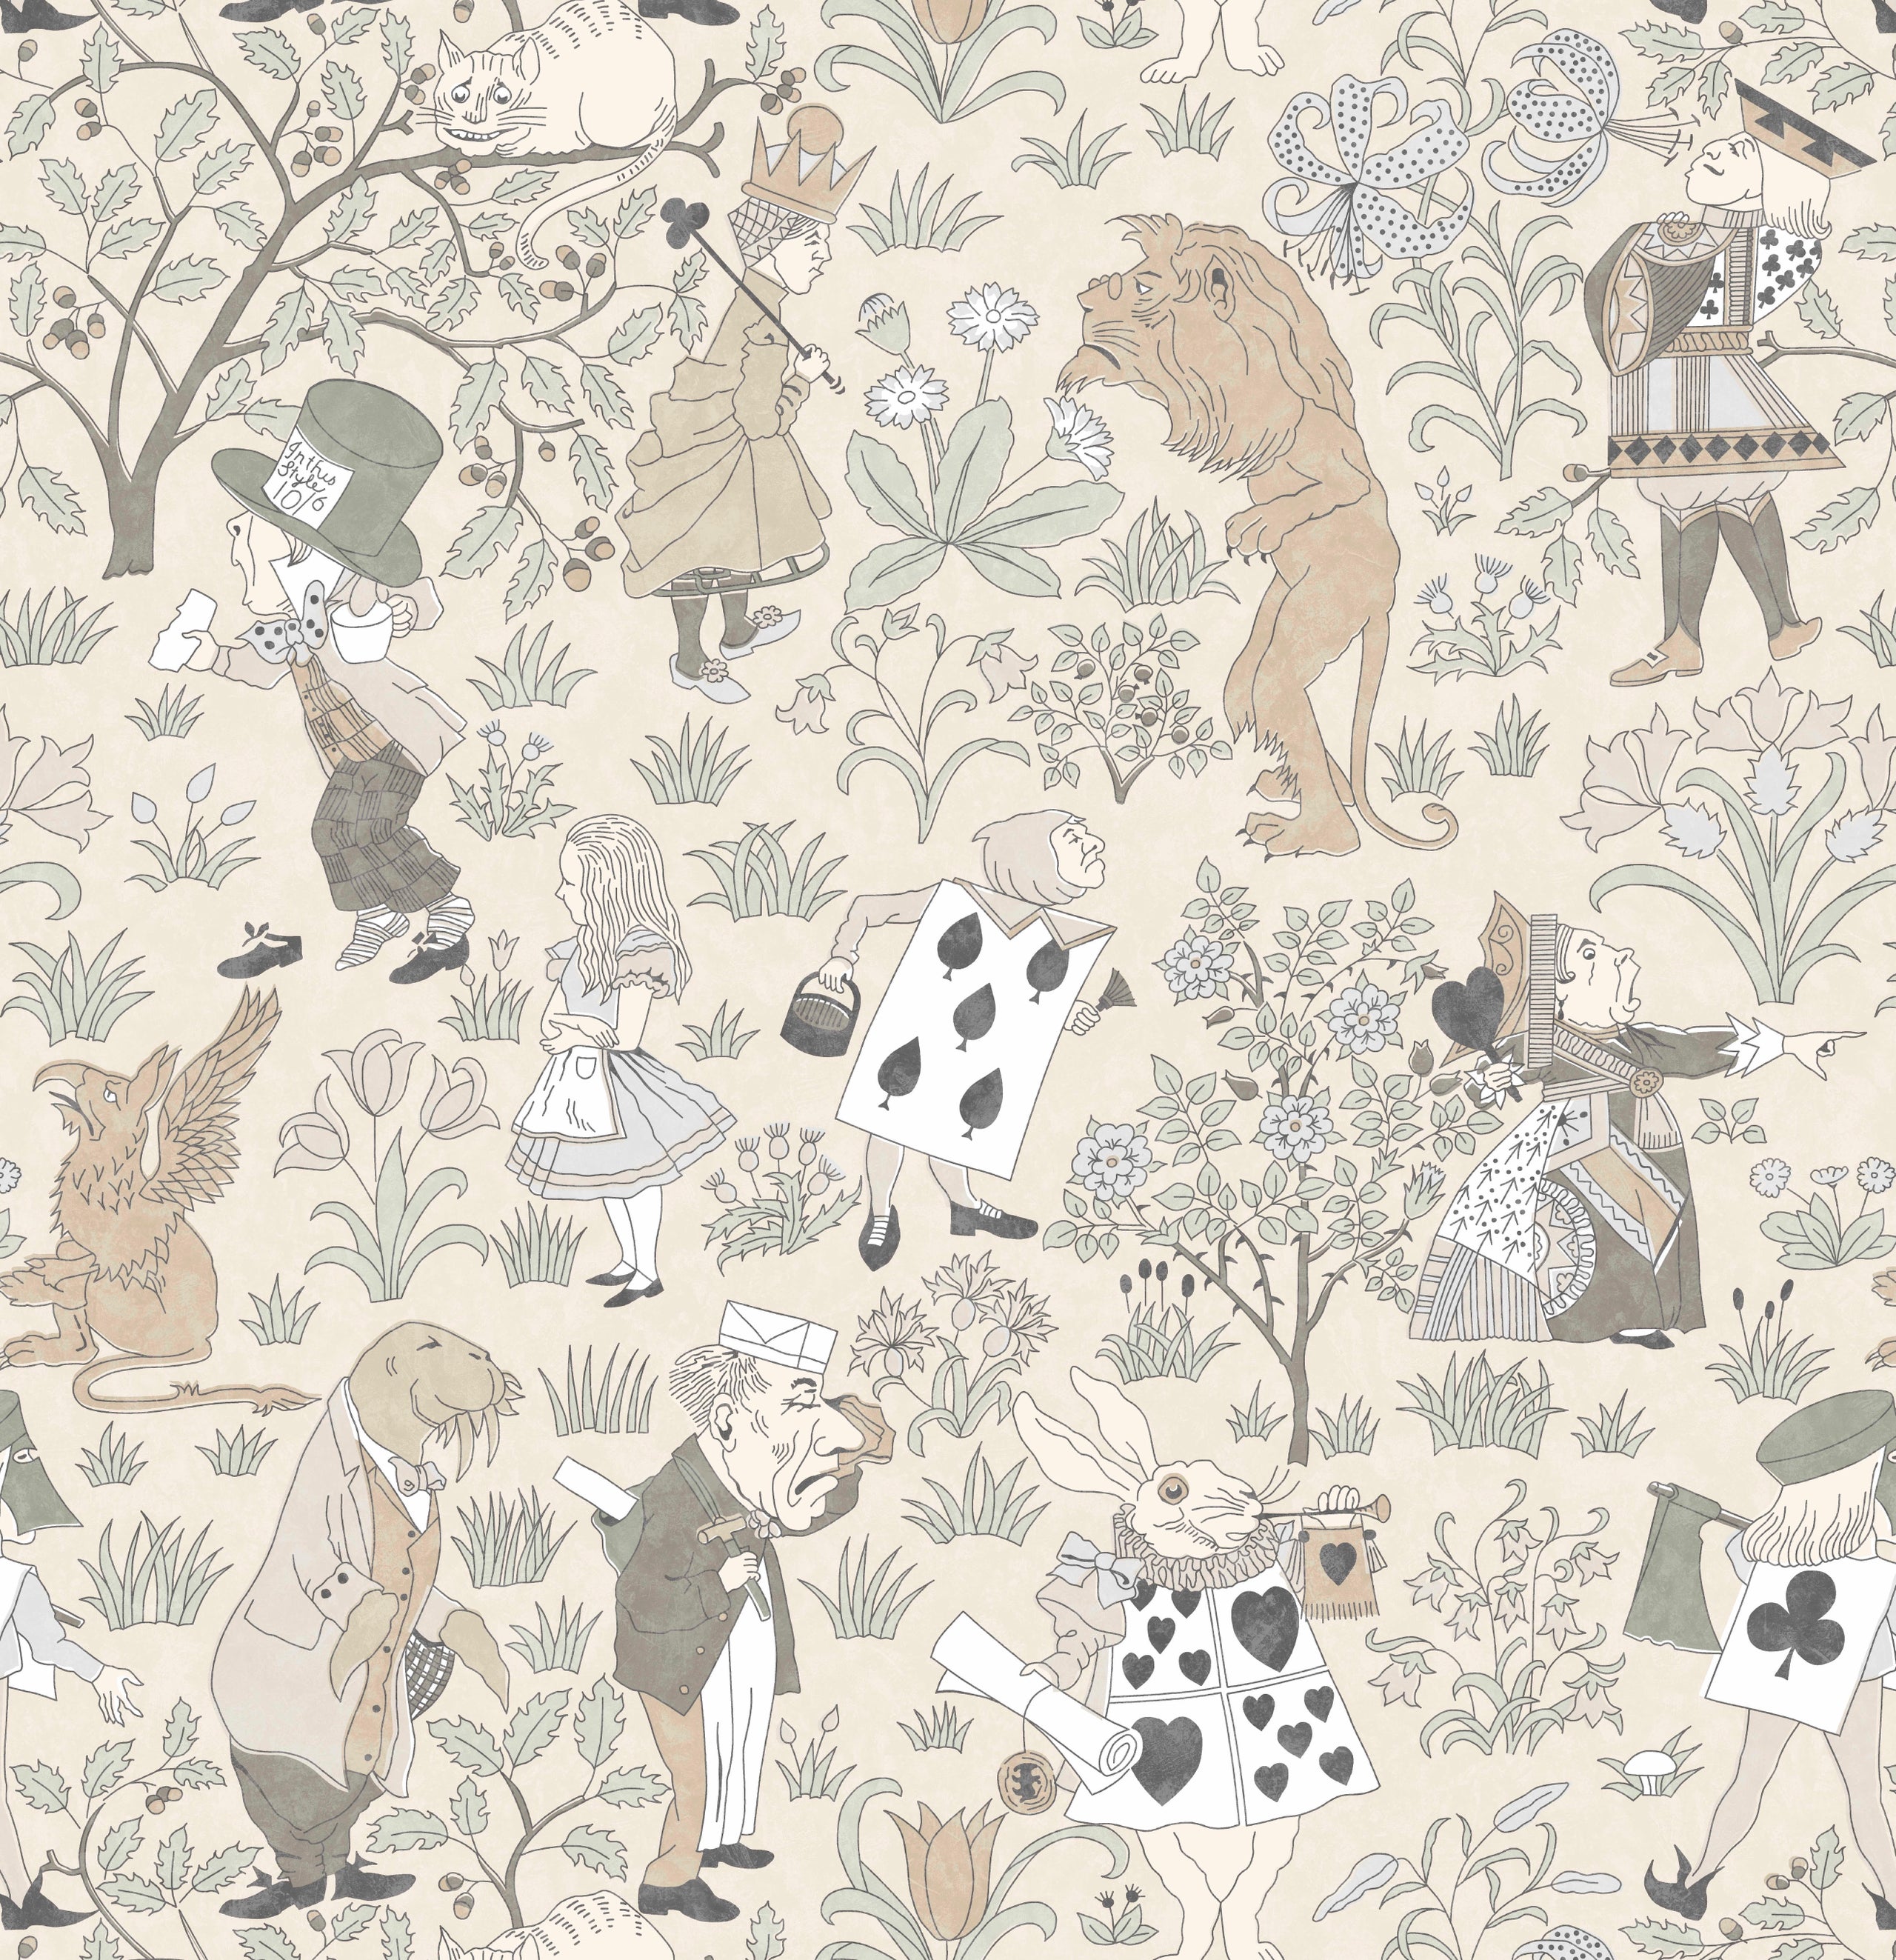  Voysey - Alice in Wonderland Wallpaper